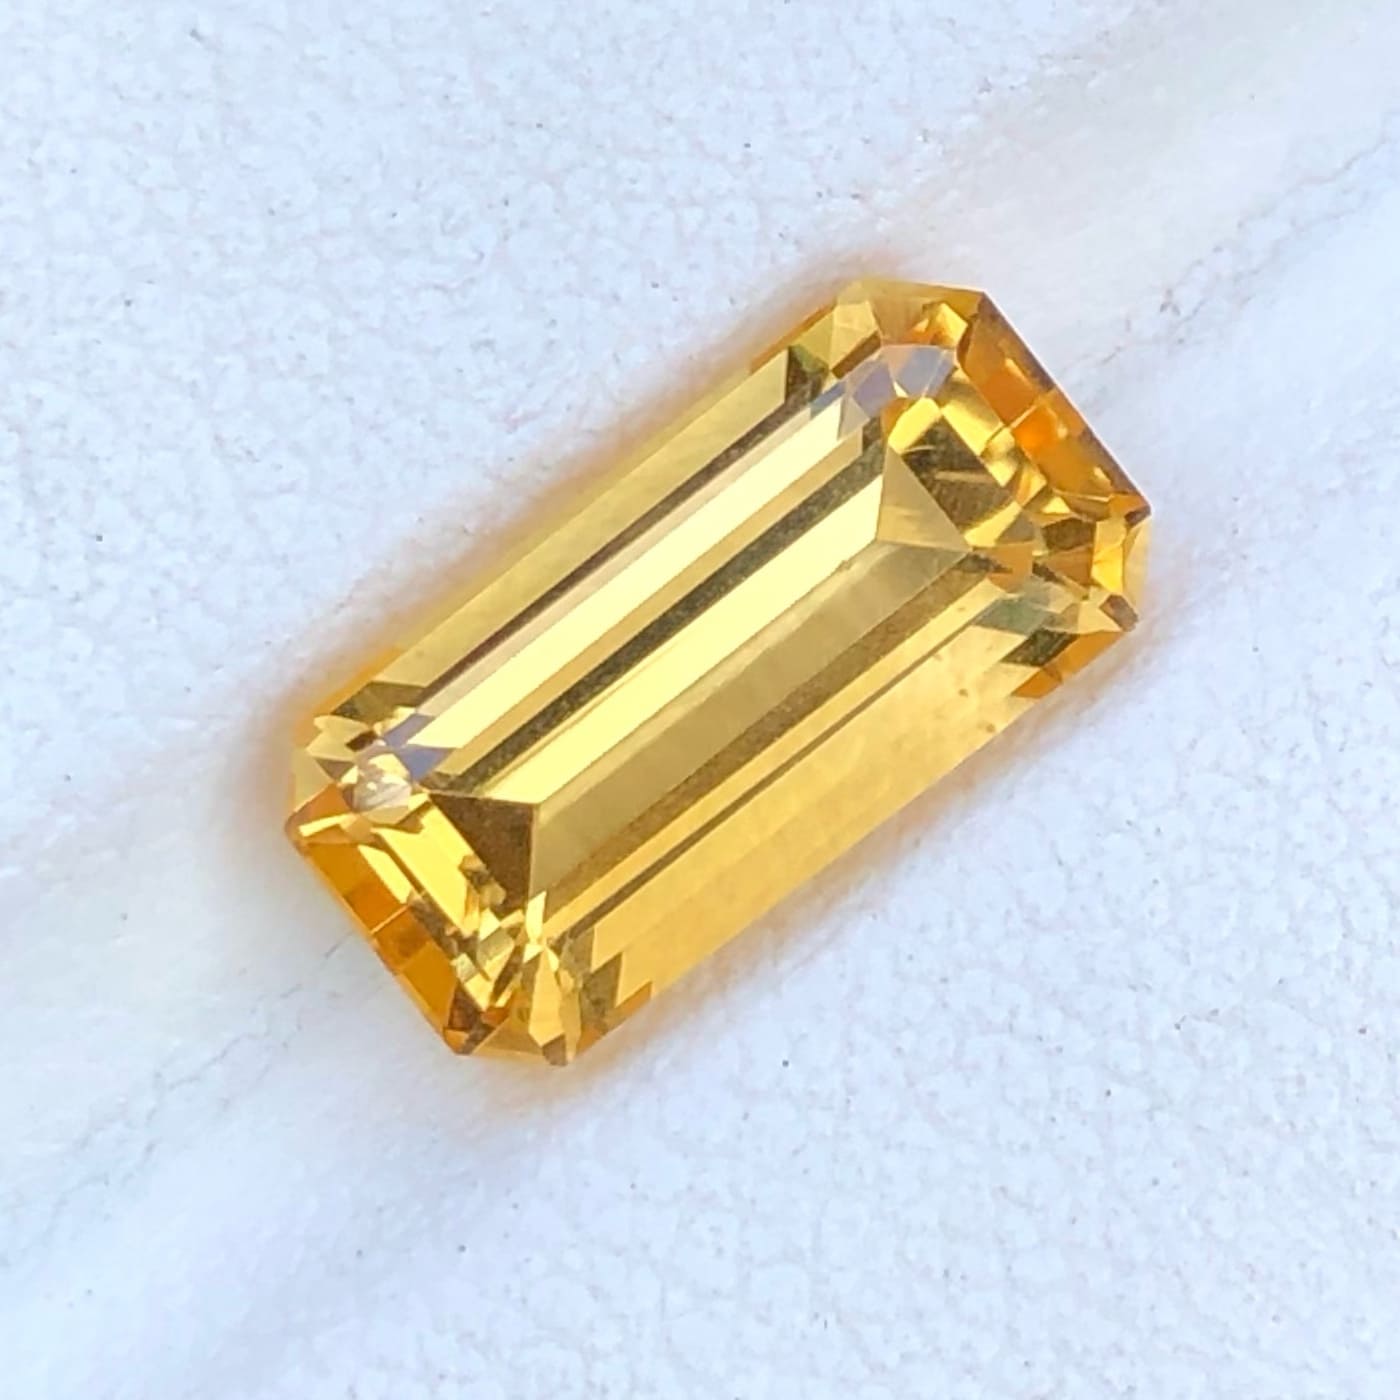 Rich Golden Citrine - 2.8 carats